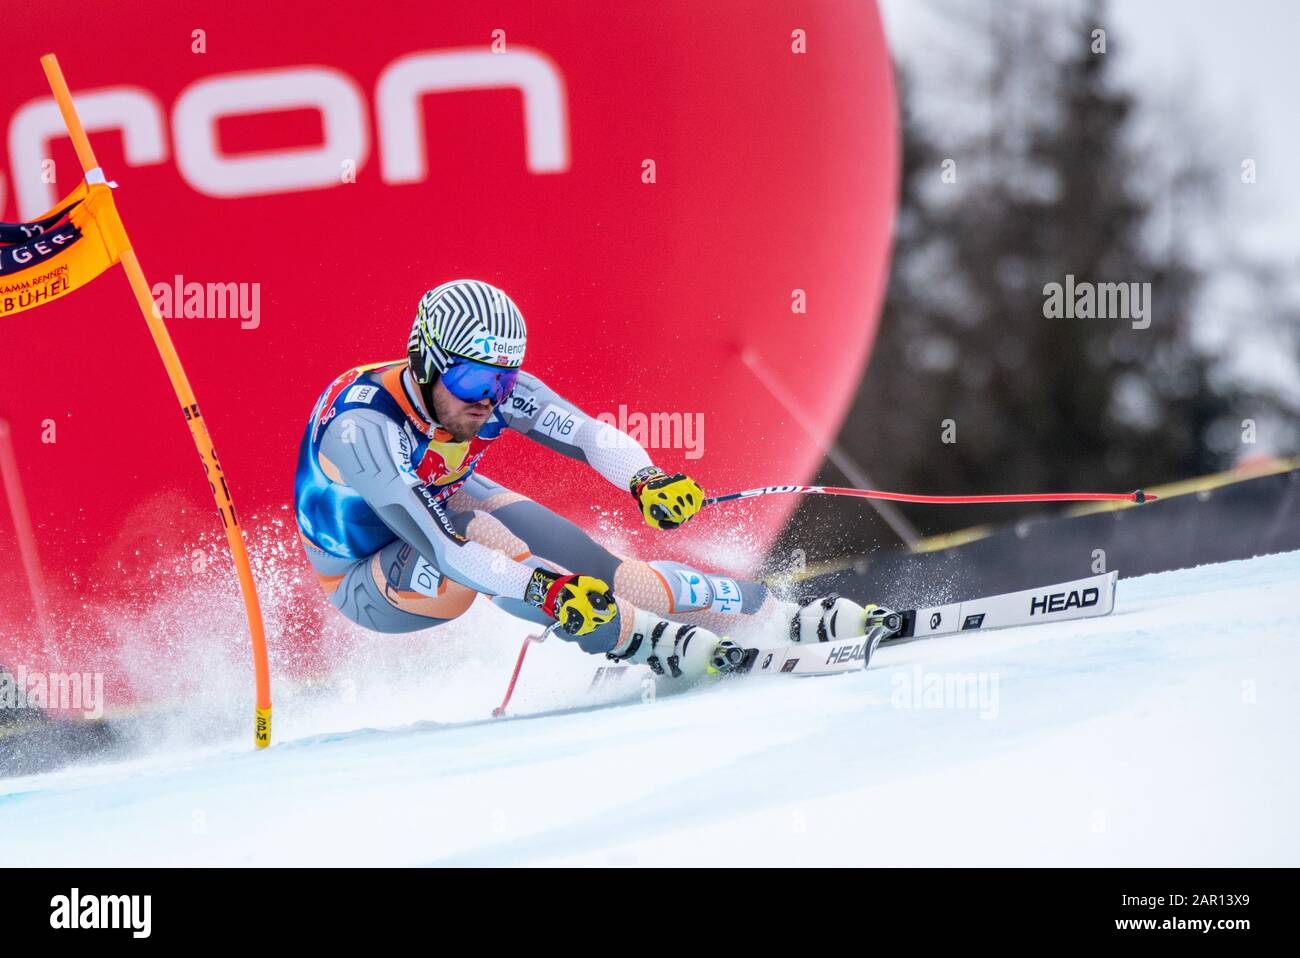 Kitzbuehel, Austria. 25th gennaio 2020. Kjetil Jansrud di Norvegia presso lo Ski Alpin: 80. Hahnenkamm Race 2020 - Audi FIS Alpine Ski World Cup - Downhill maschile alla Streif il 25 gennaio 2020 a Kitzbuehel, AUSTRIA. Foto Stock